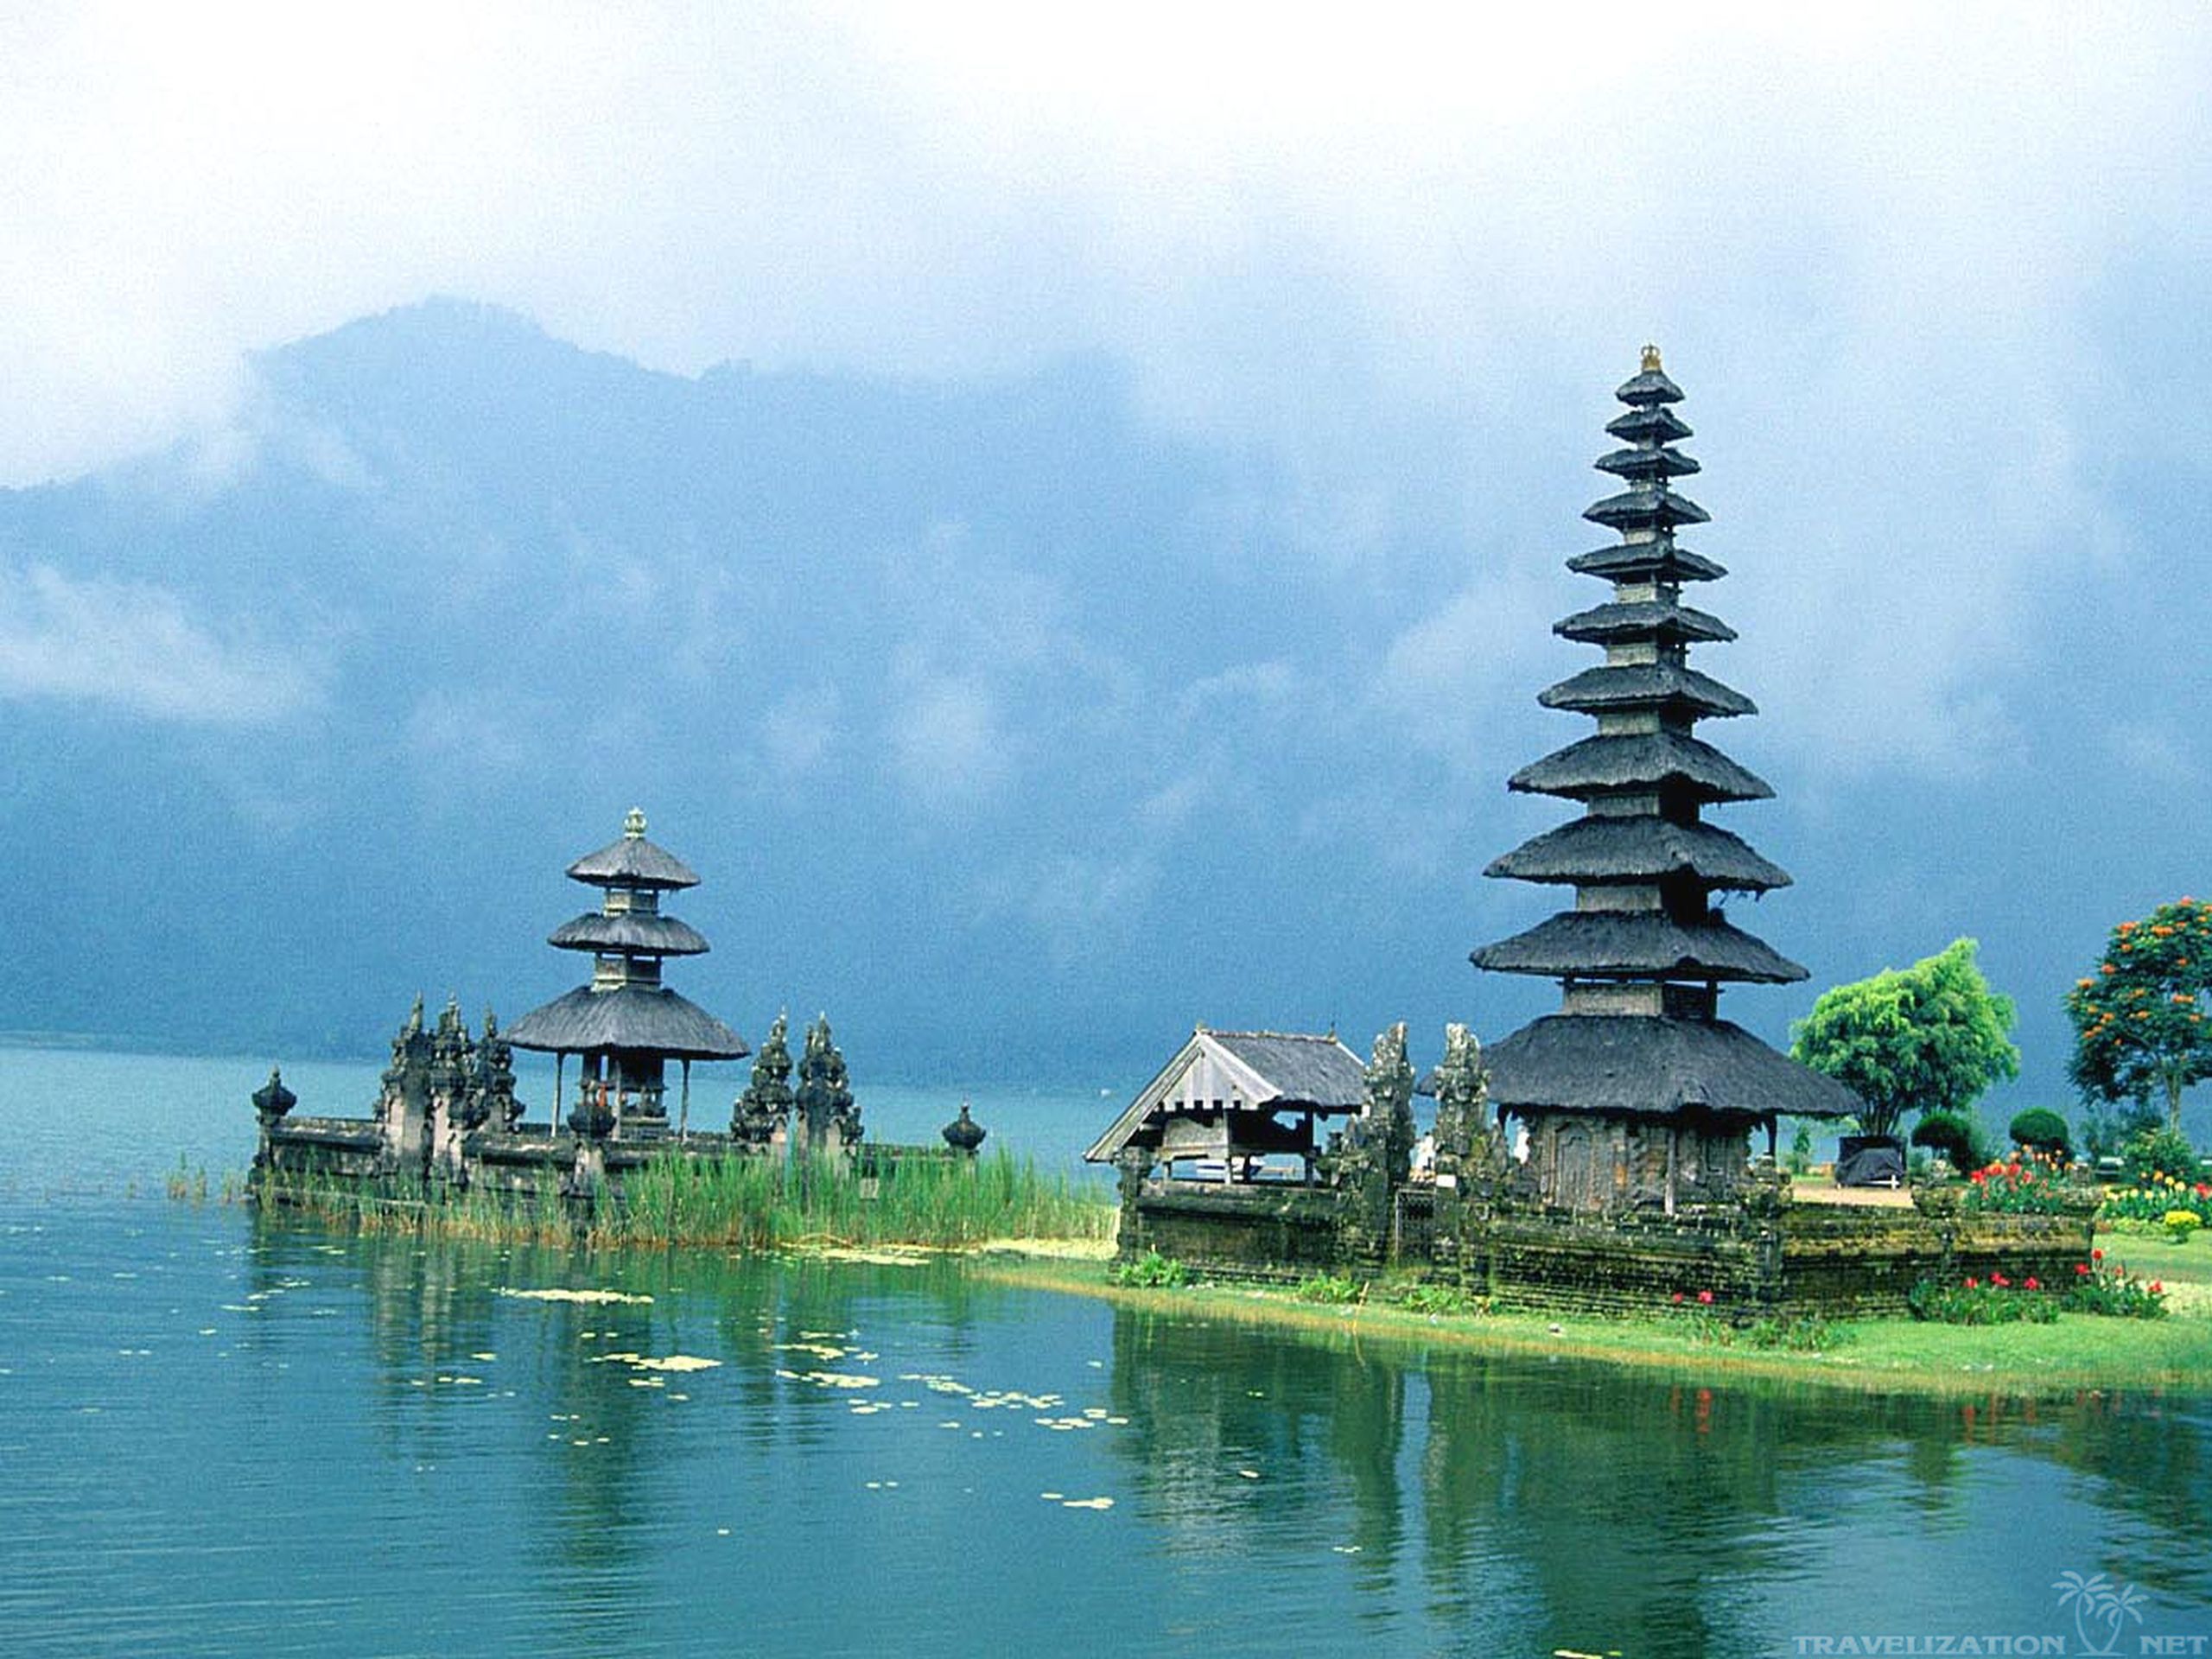 Индонезия. Бедугул храм Бали. Бали (остров в малайском архипелаге). Храм Пура улун дану. Кинтамани, Бангли Редженси, Бали - Индонезия.